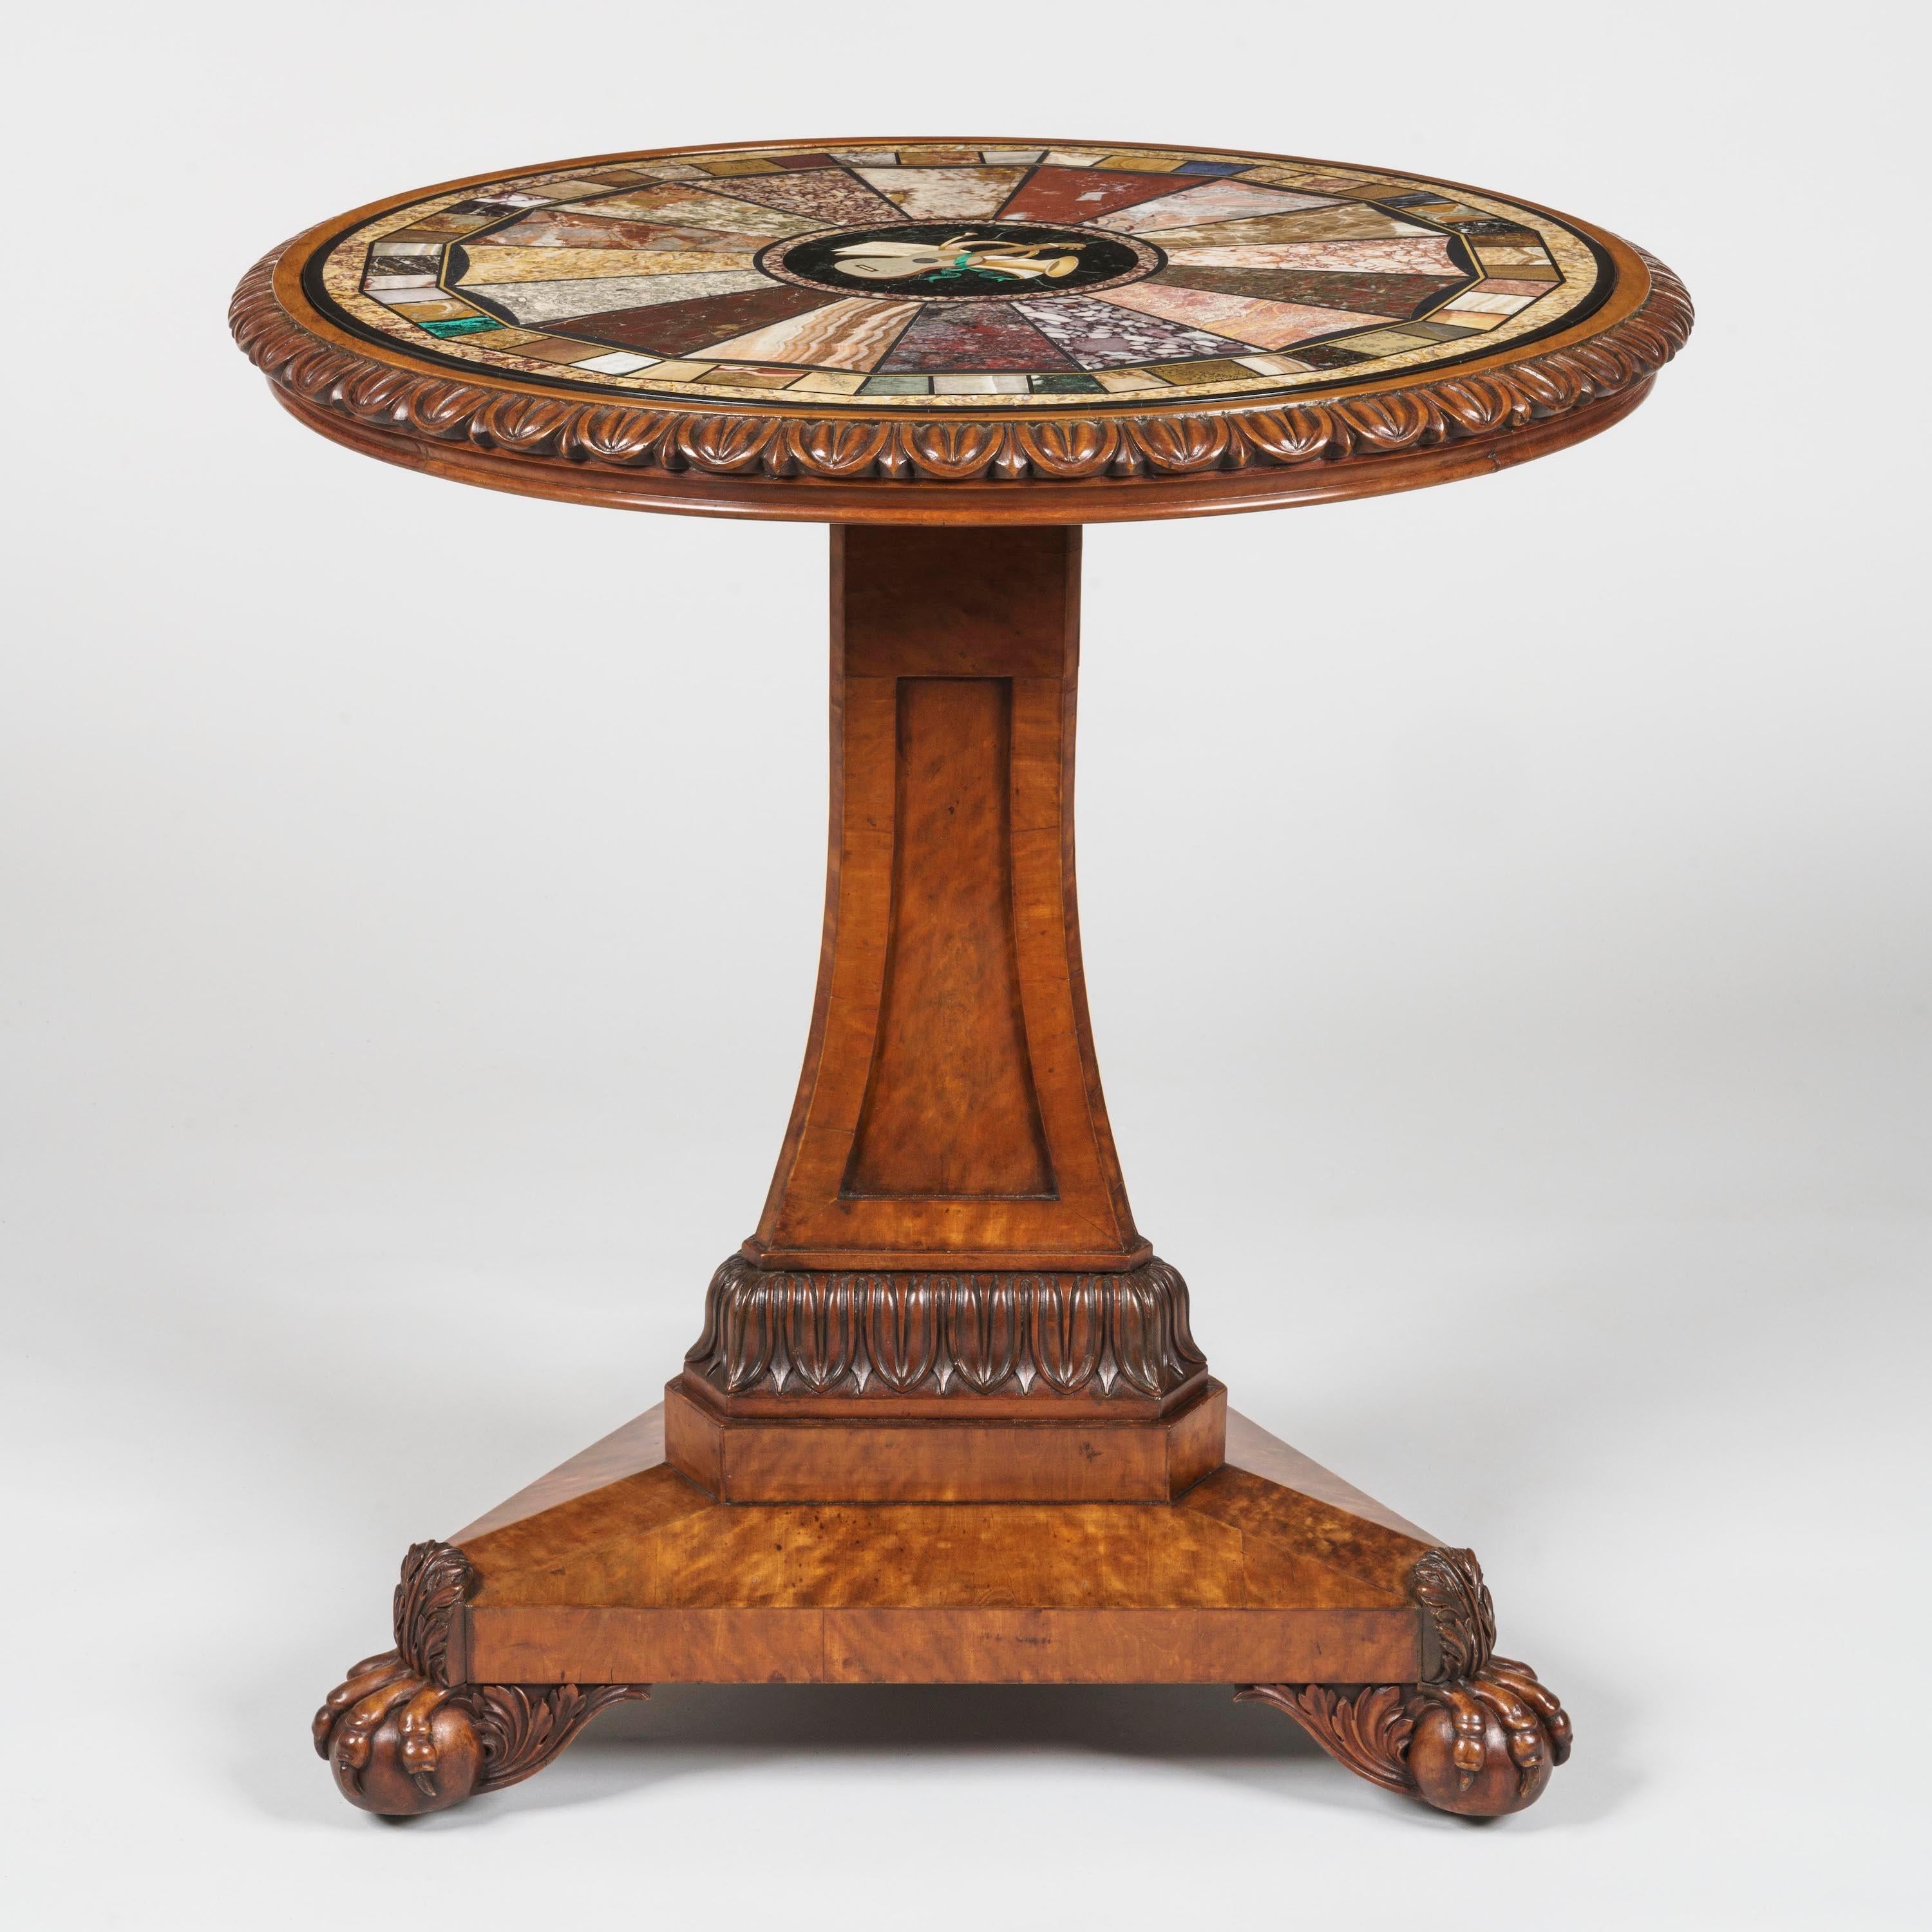 European 19th Century 'Grand Tour' Table with Specimen Marble and Pietra Dura Stone Top